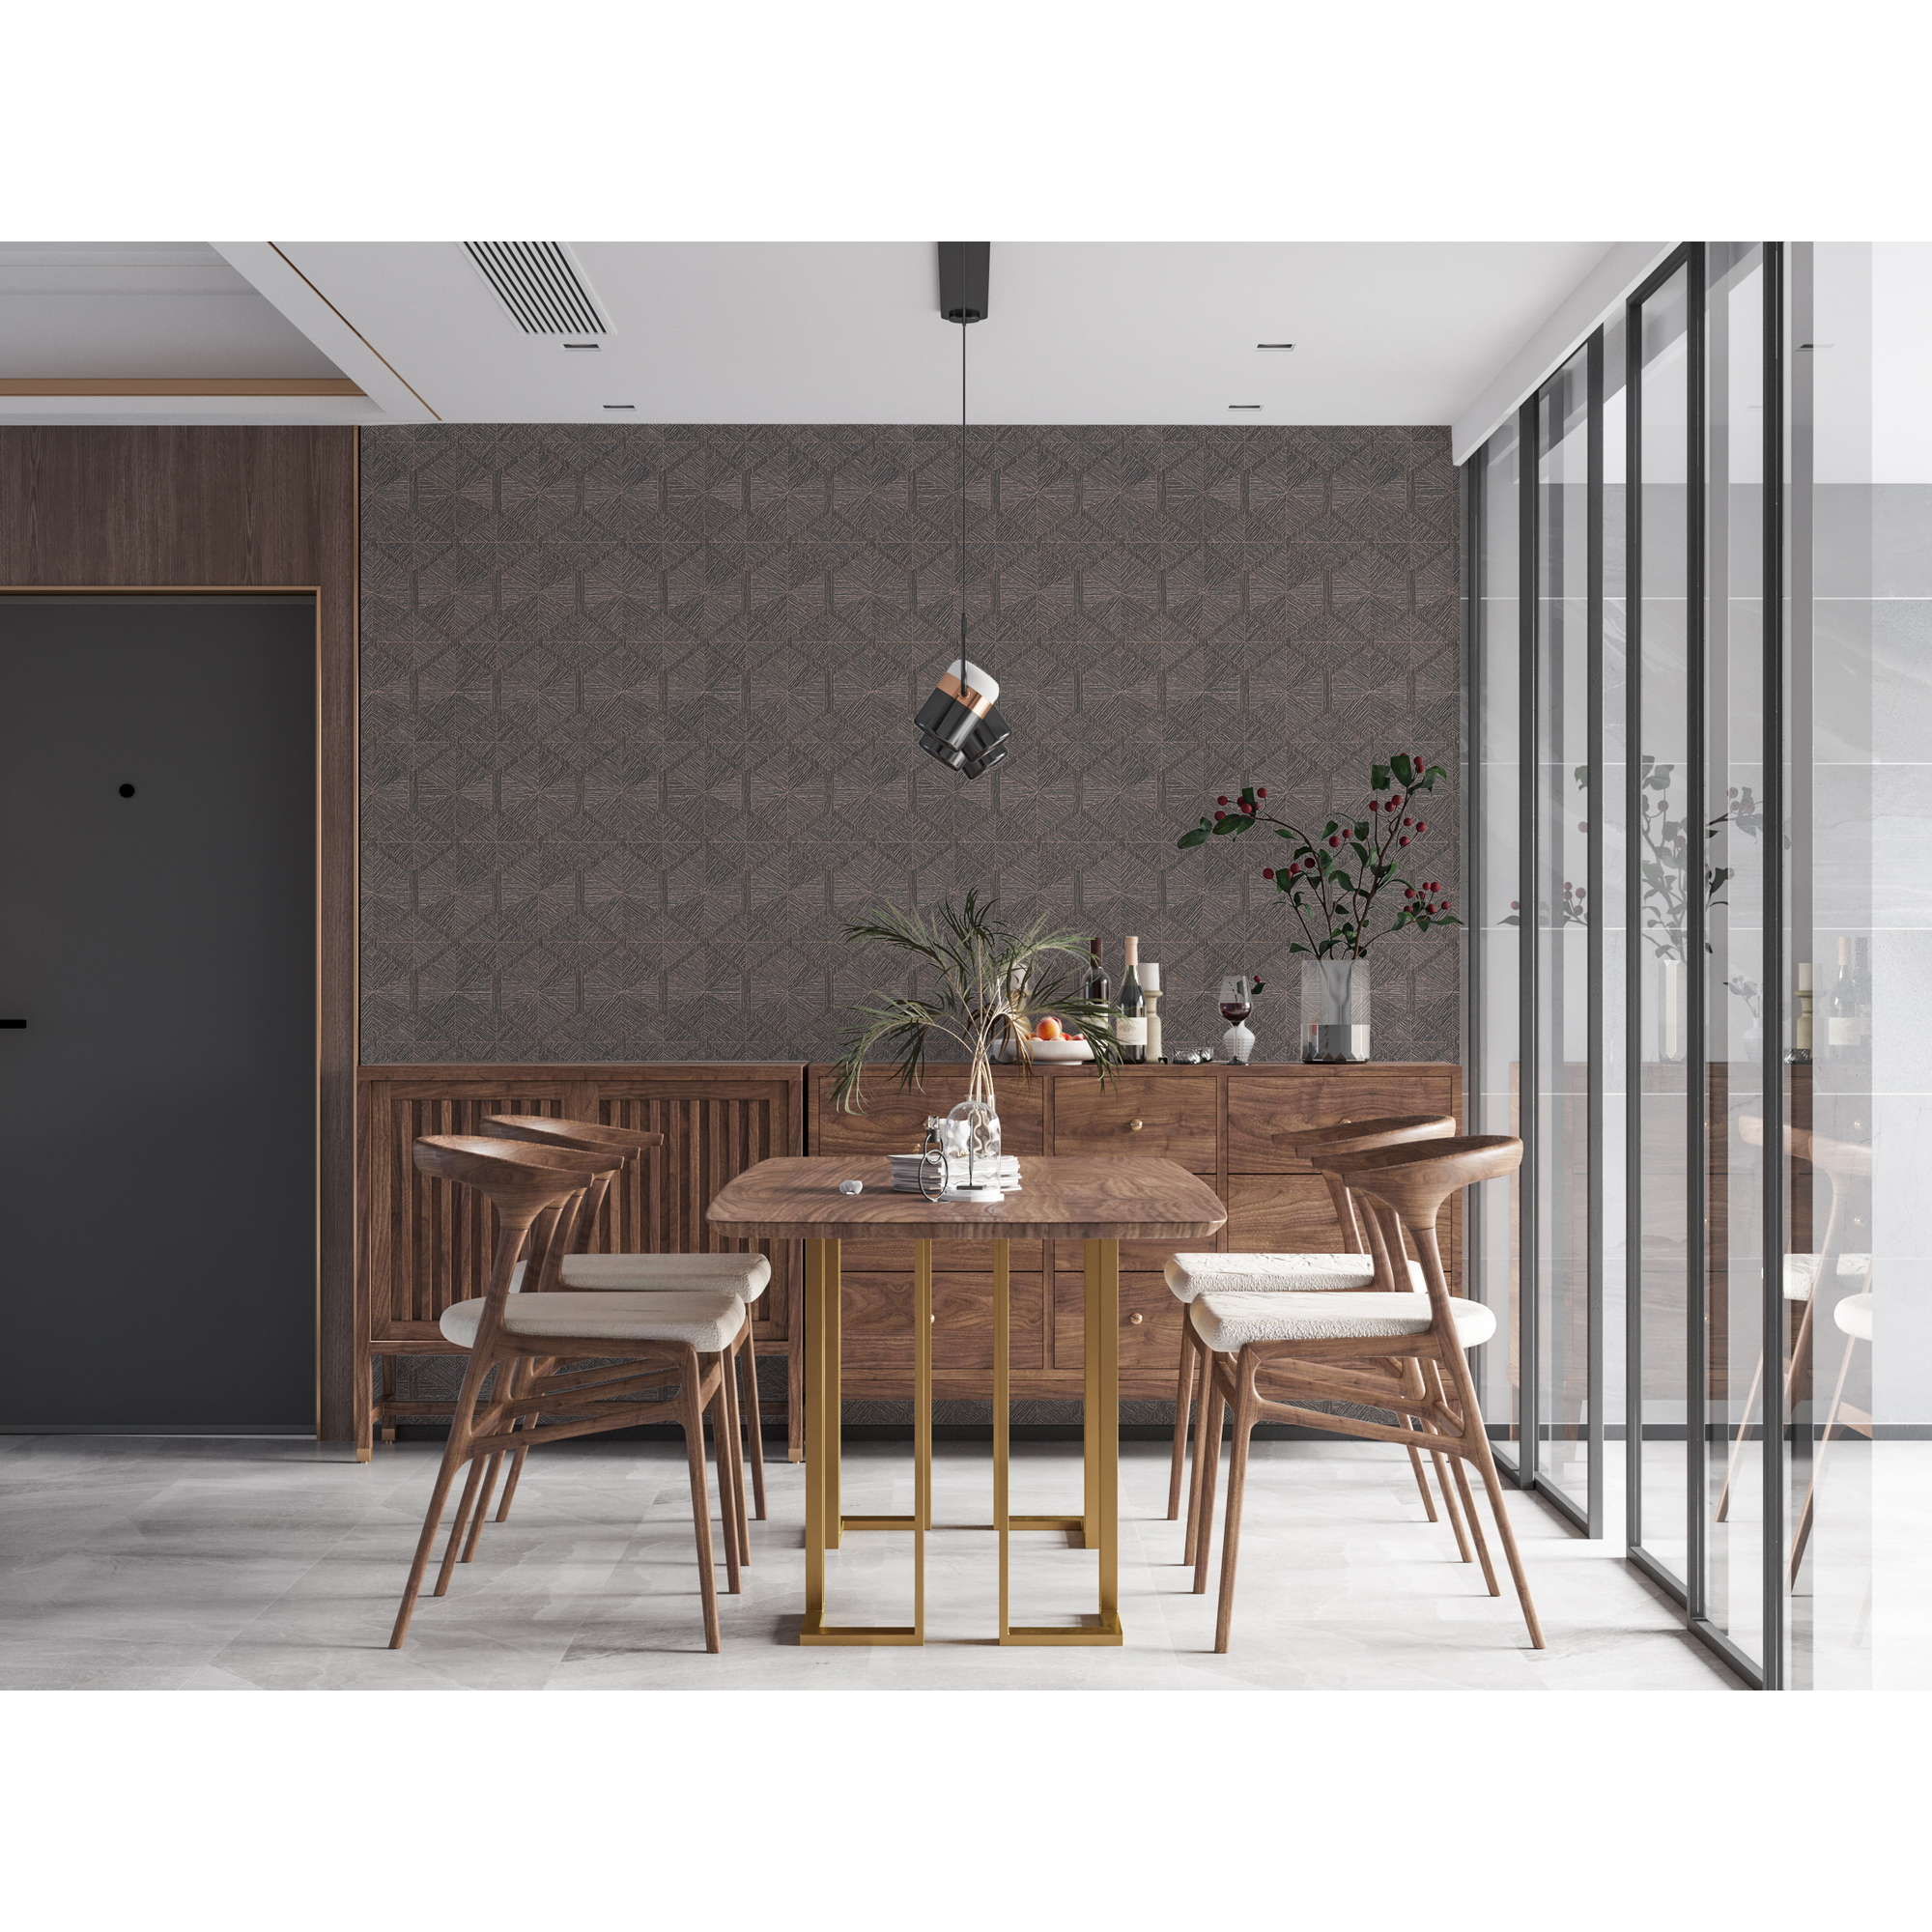 Vliestapete 'My Home. My Spa.' Dreiecke grau 10,05 x 0,53 m + product picture